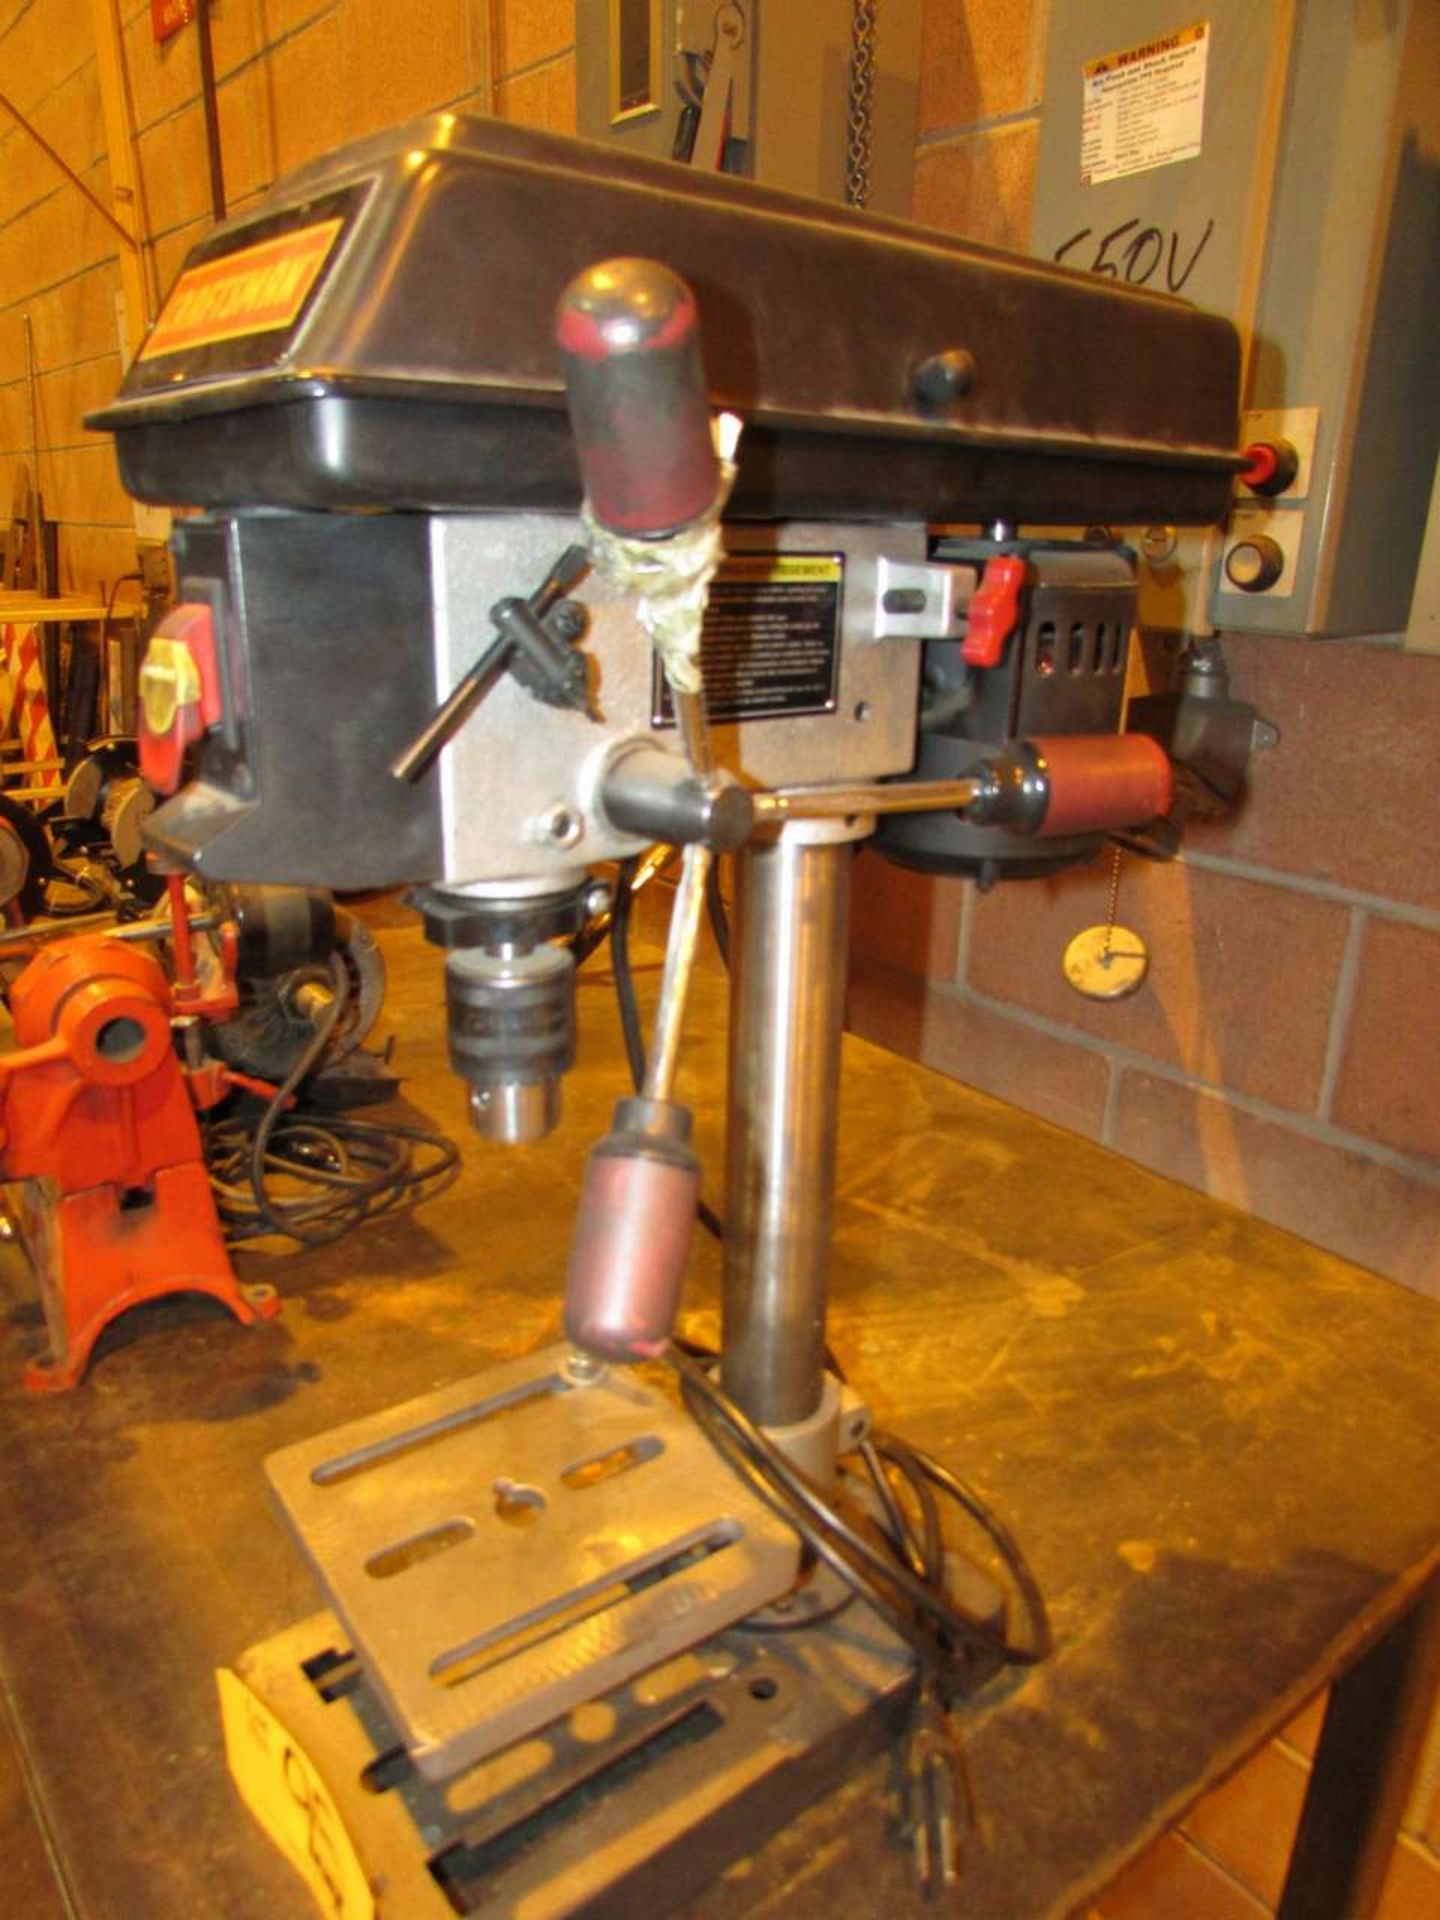 Craftsman 137.2807 8" Benchtop Drill Press - Image 2 of 2